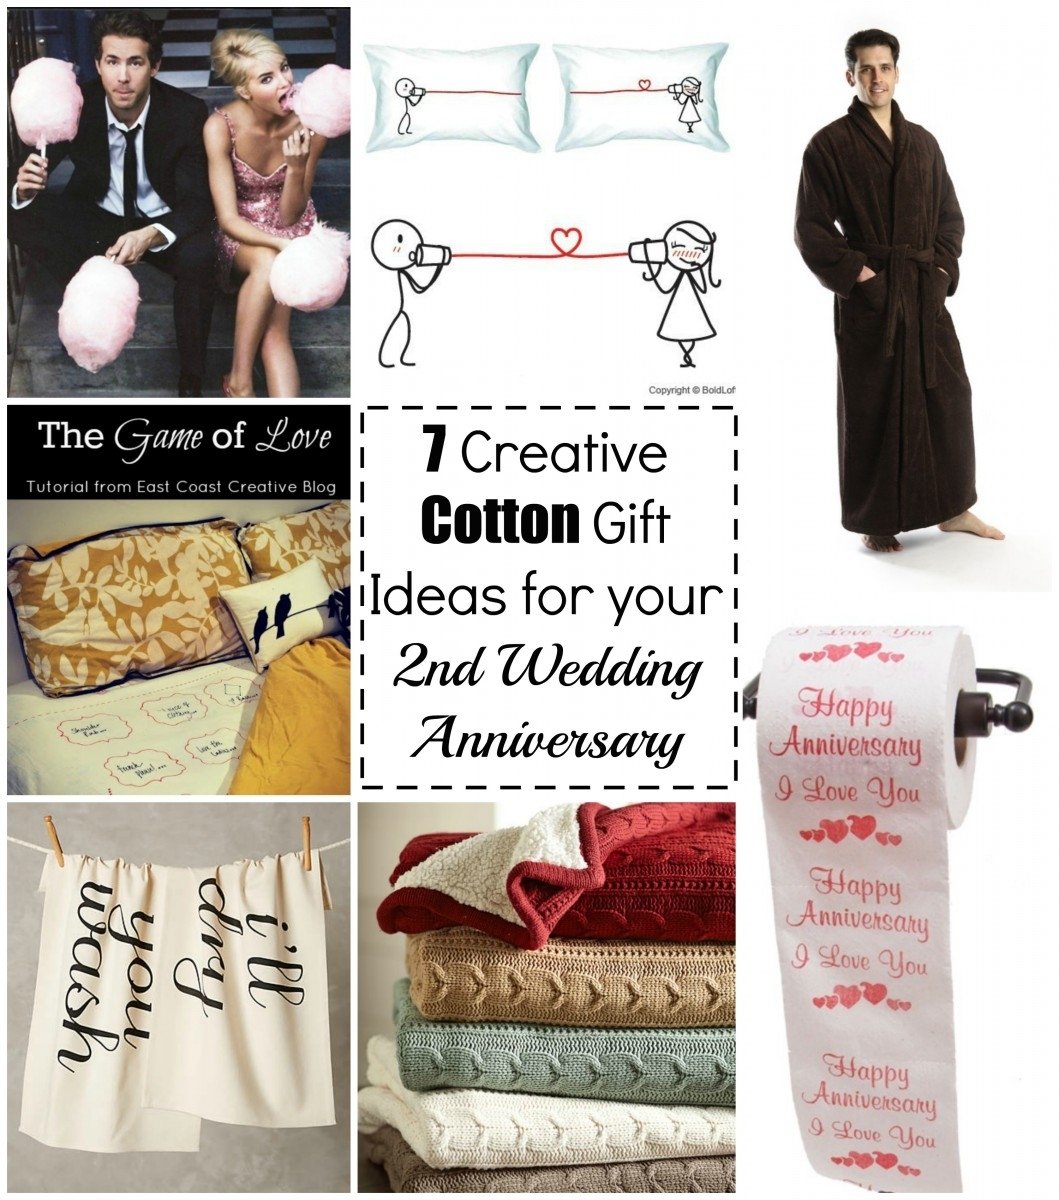 10 Lovely Wedding Anniversary Ideas For Her good 2nd wedding anniversary gifts for her b20 on images selection 2 2022